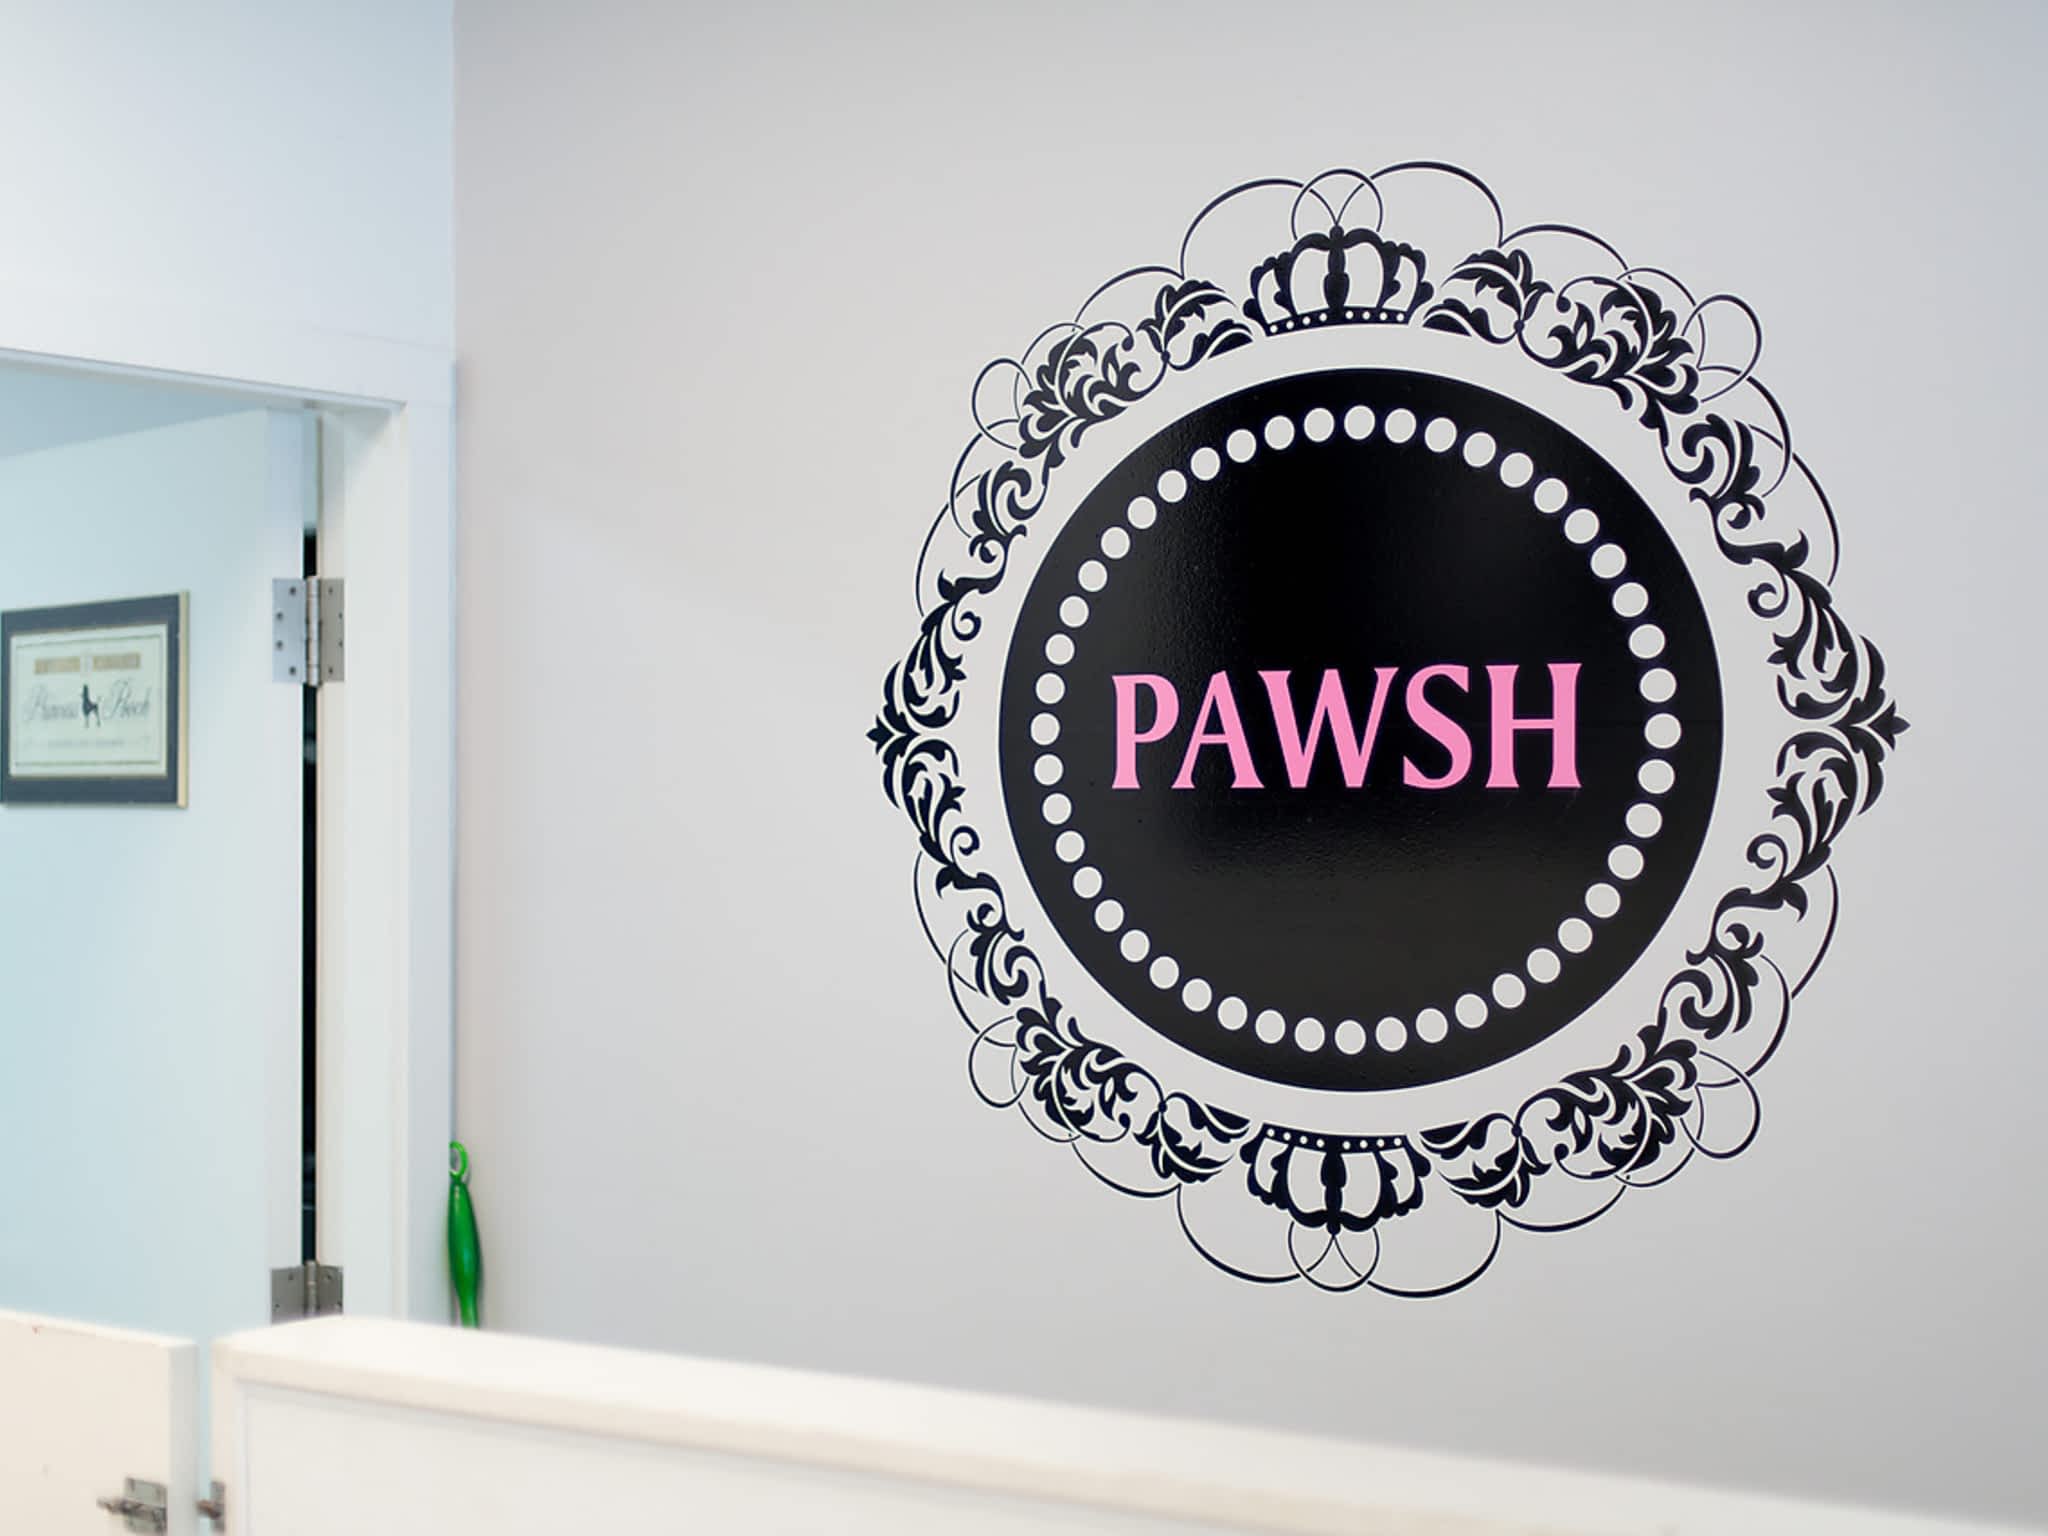 photo Pawsh Dog Spa Inc